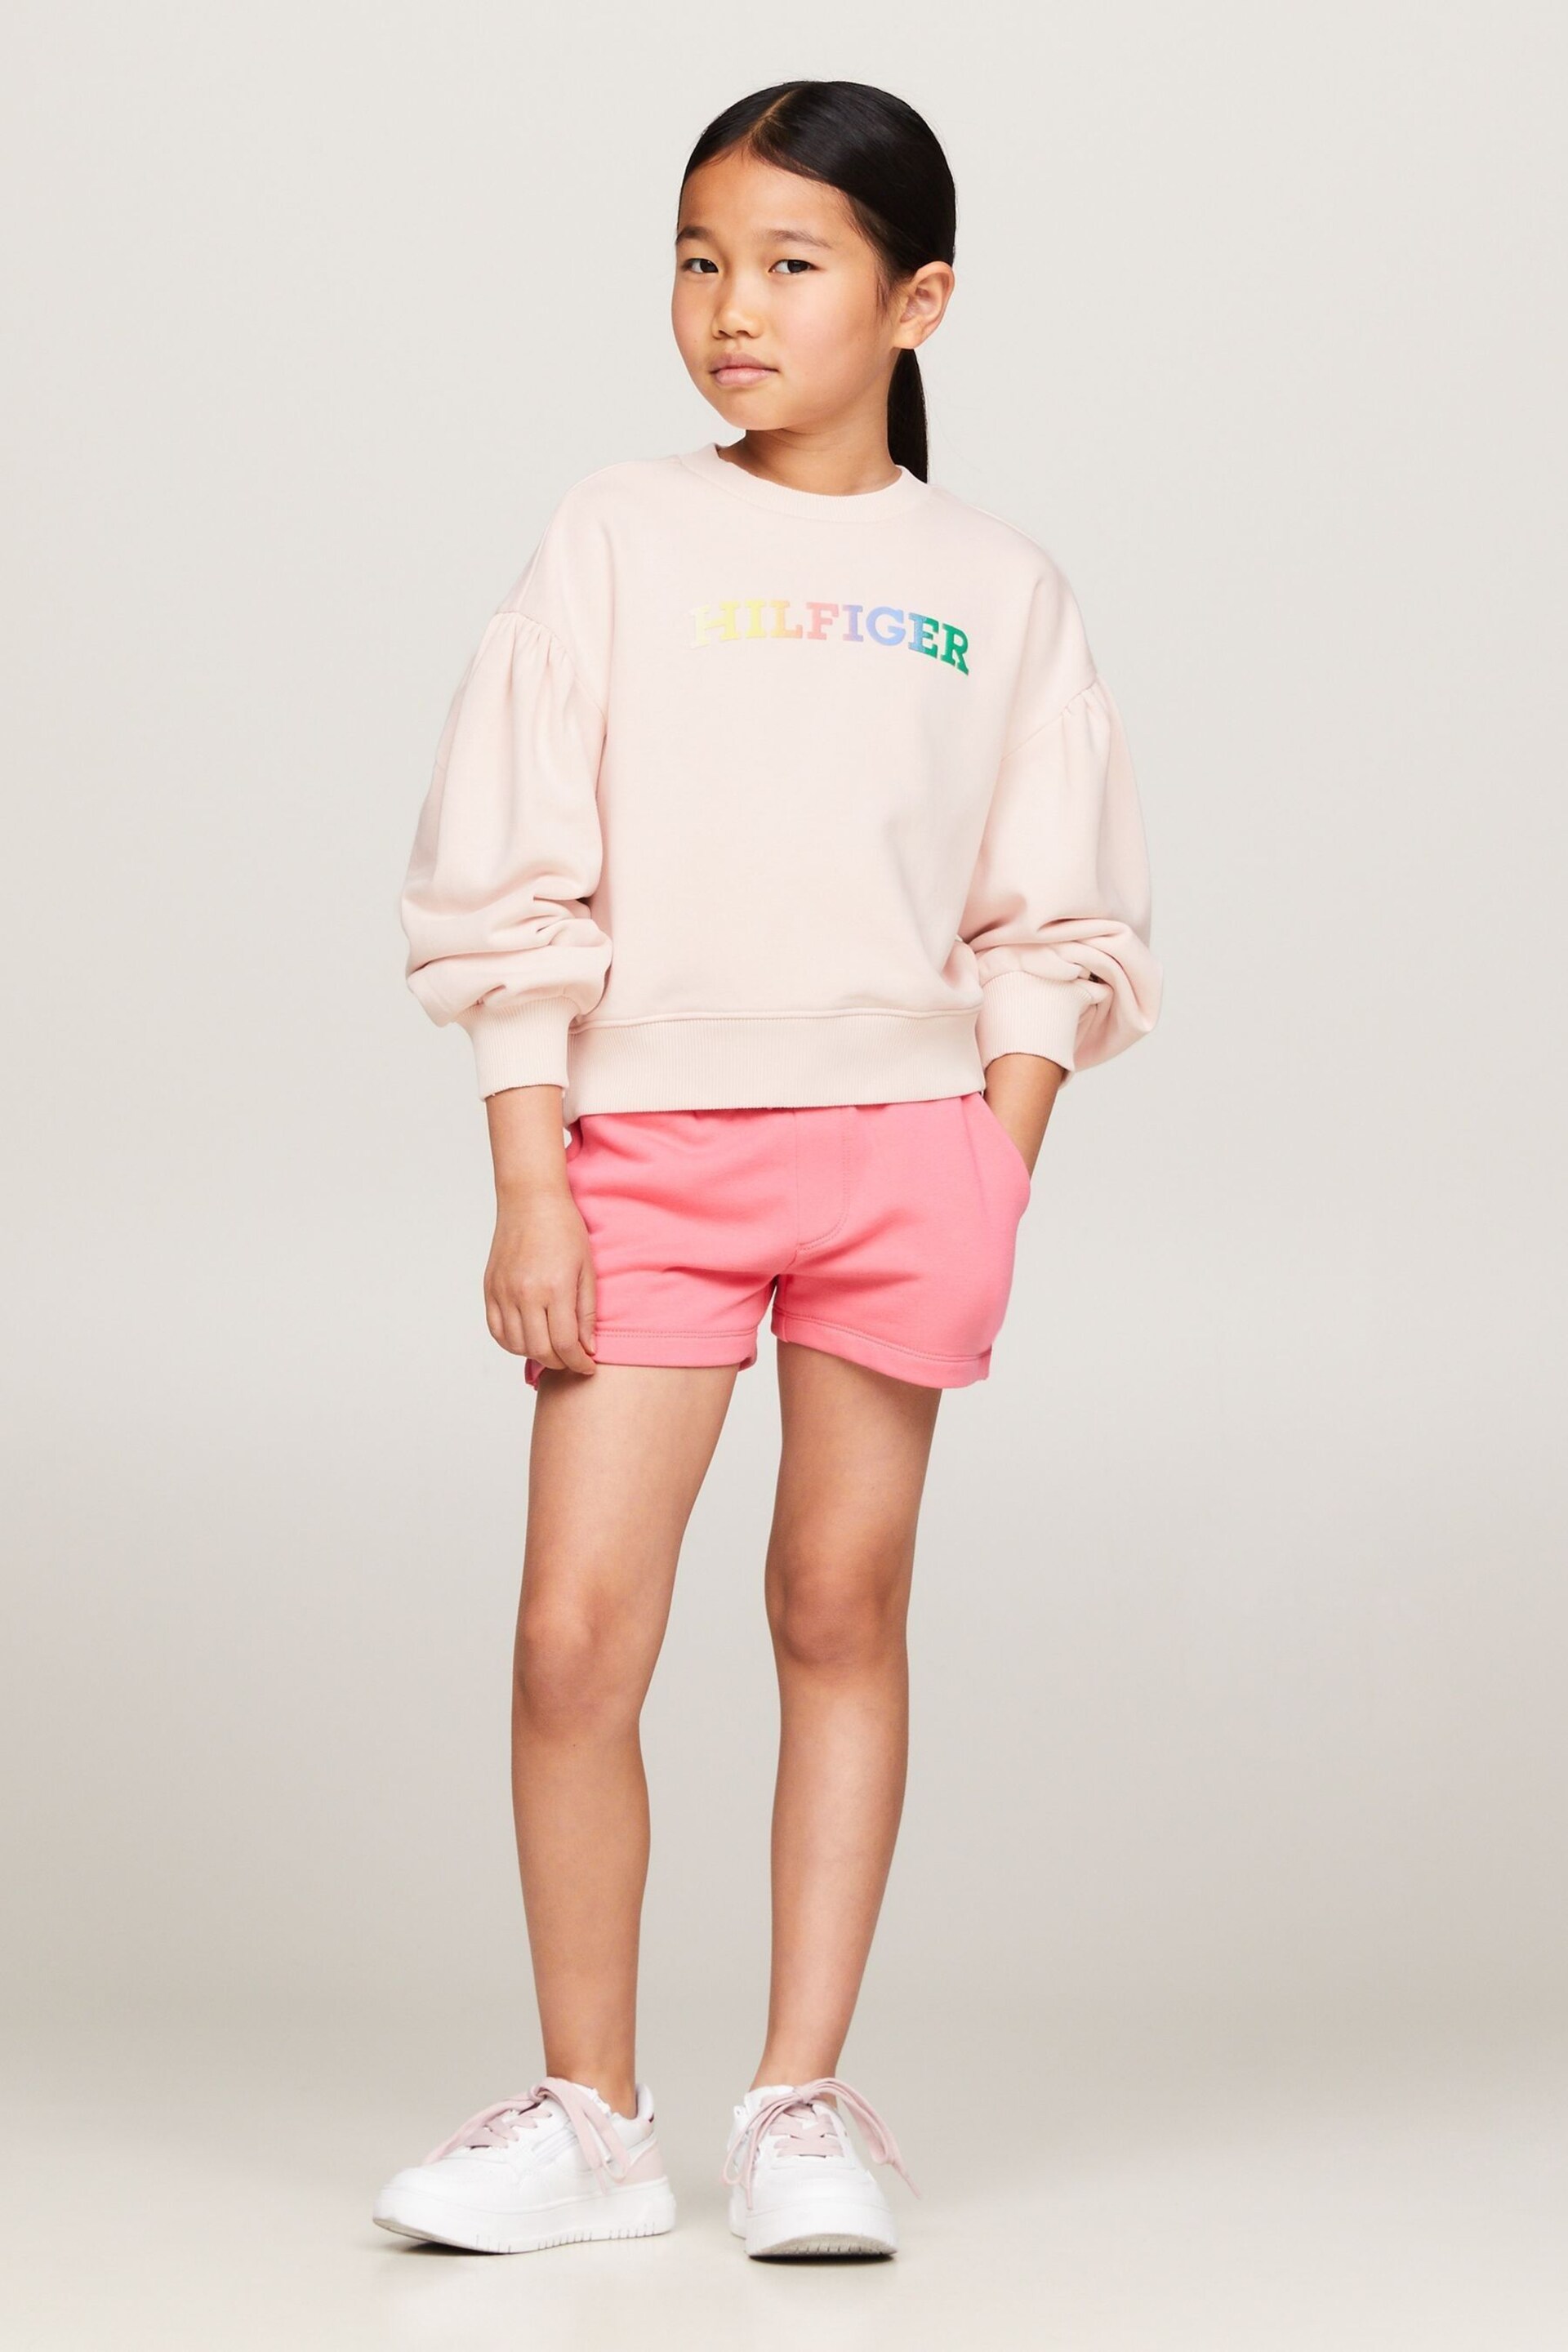 Tommy Hilfiger Pink Monotype Sweatshirt - Image 4 of 6